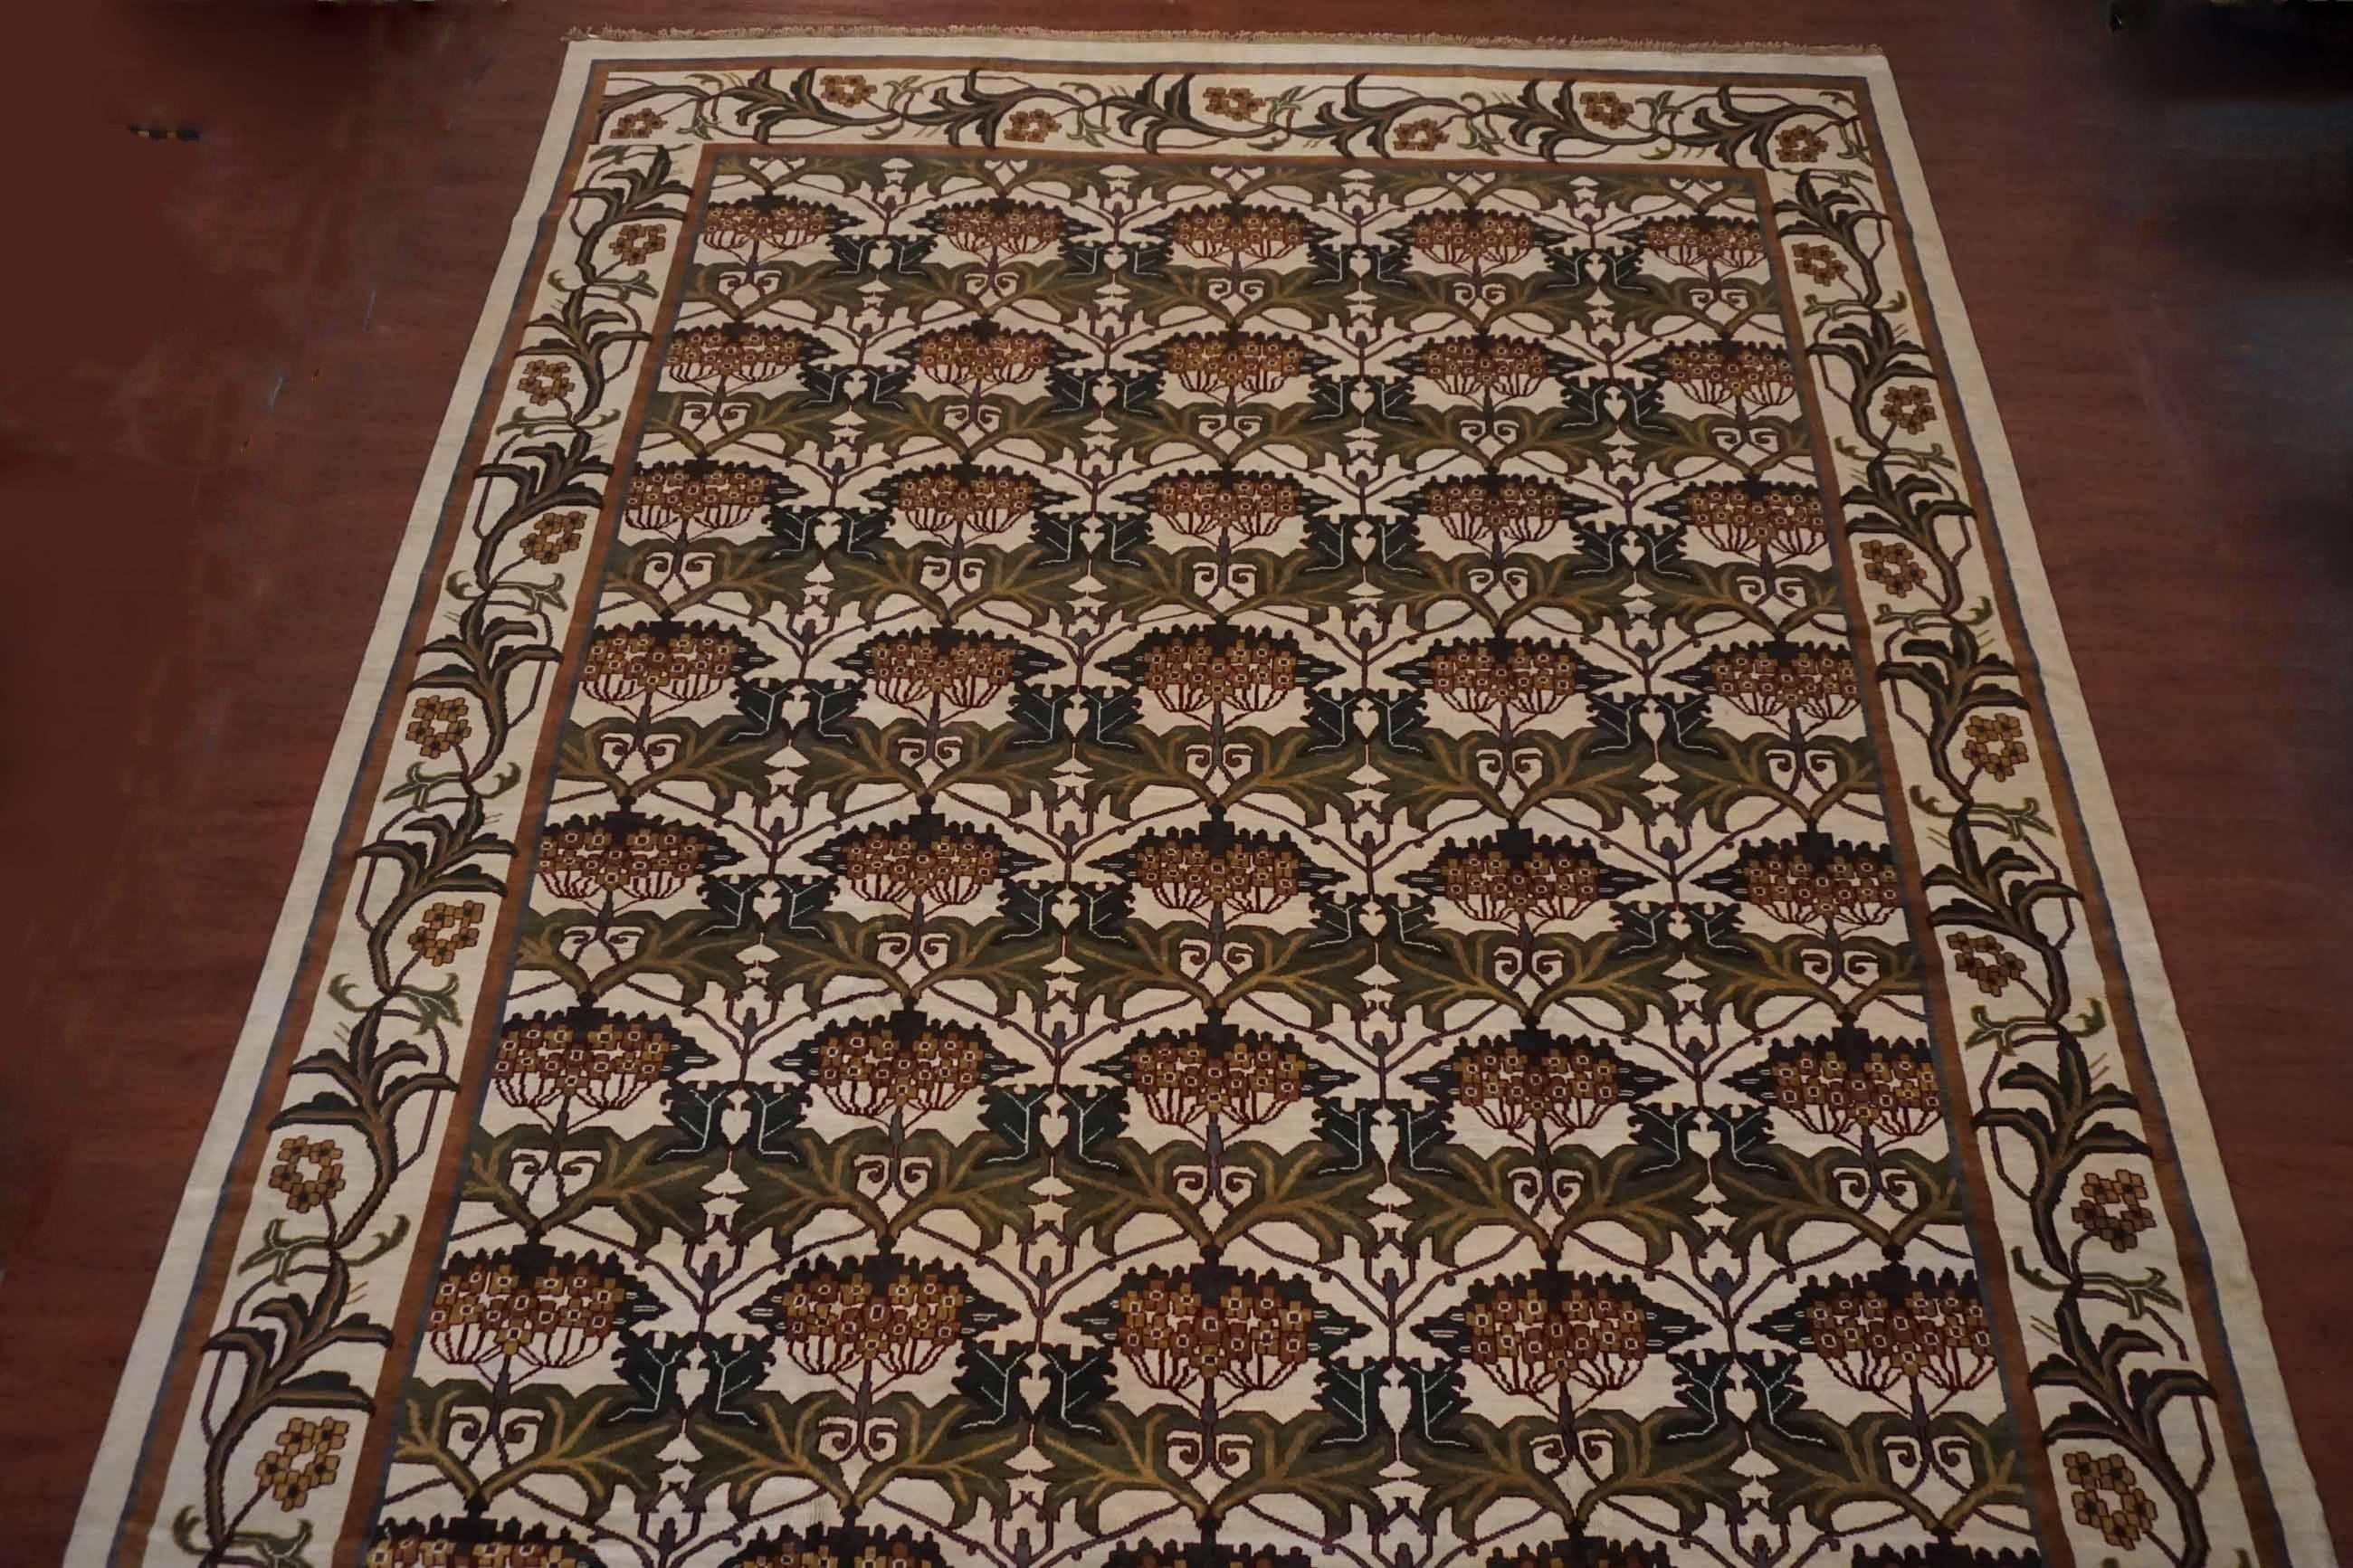 Ivory William Morris inspired rug

circa 1990

Measures: 12' 9